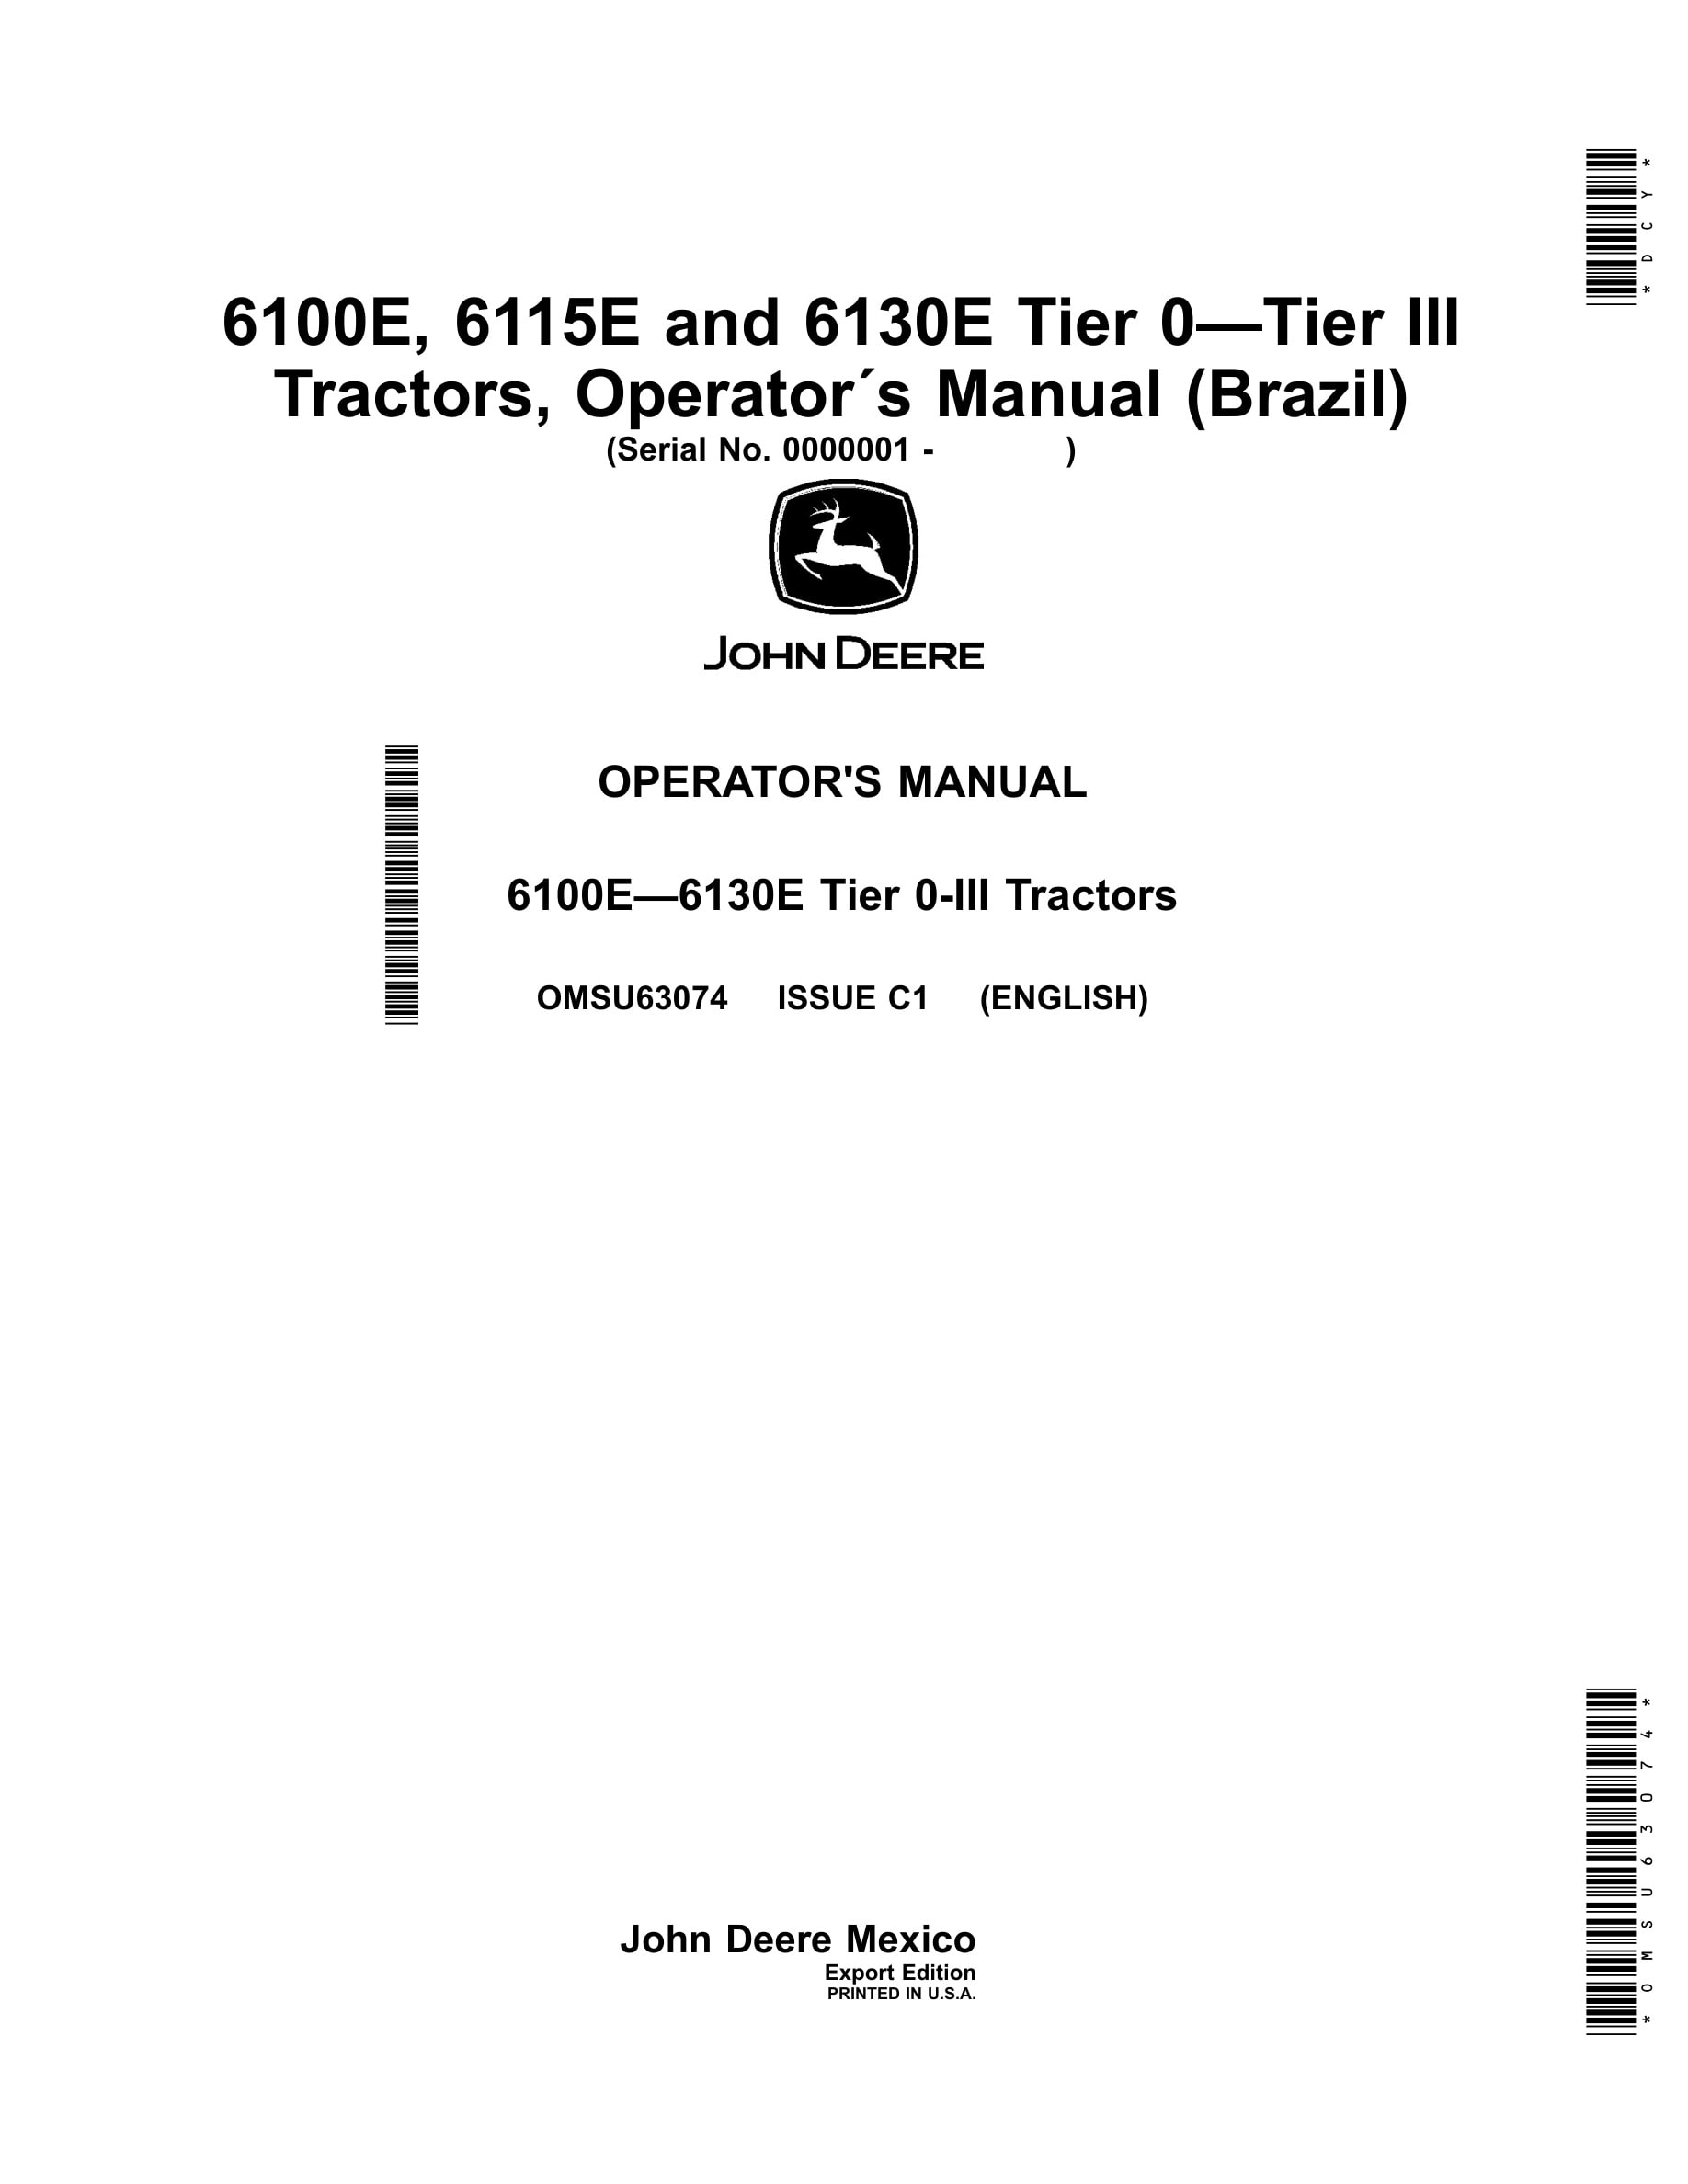 John Deere 6100e, 6115e And 6130e Tier 0-tier Iii Tractors Operator Manuals OMSU63074-1